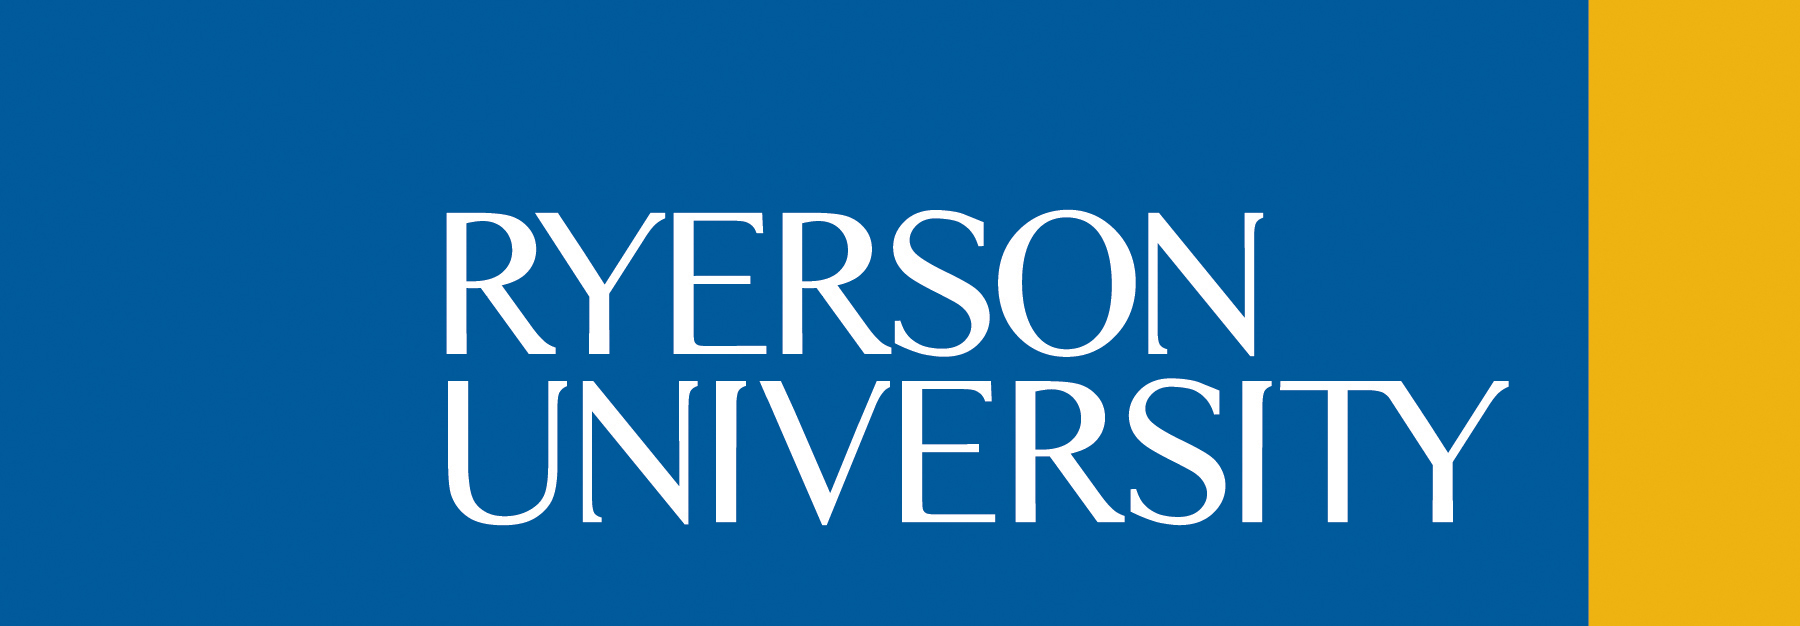 Ryerson Universirty